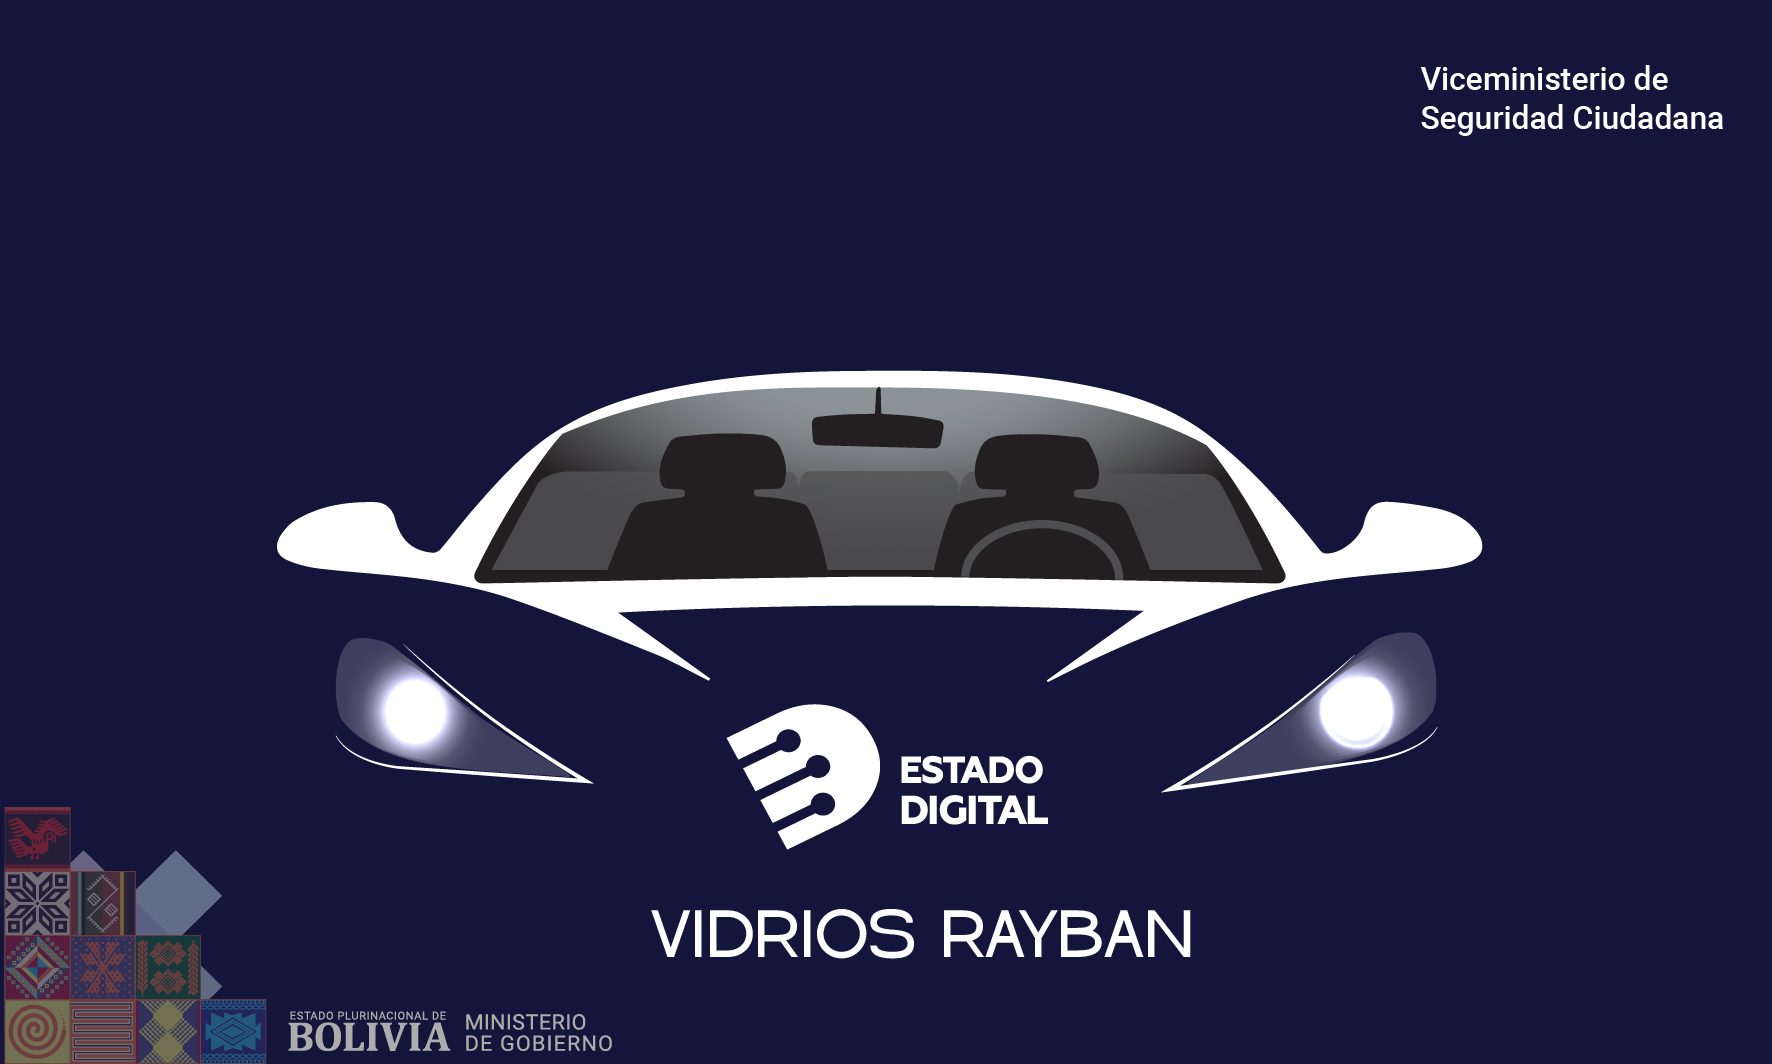 Estado Digital 3 - Vidrios Rayban